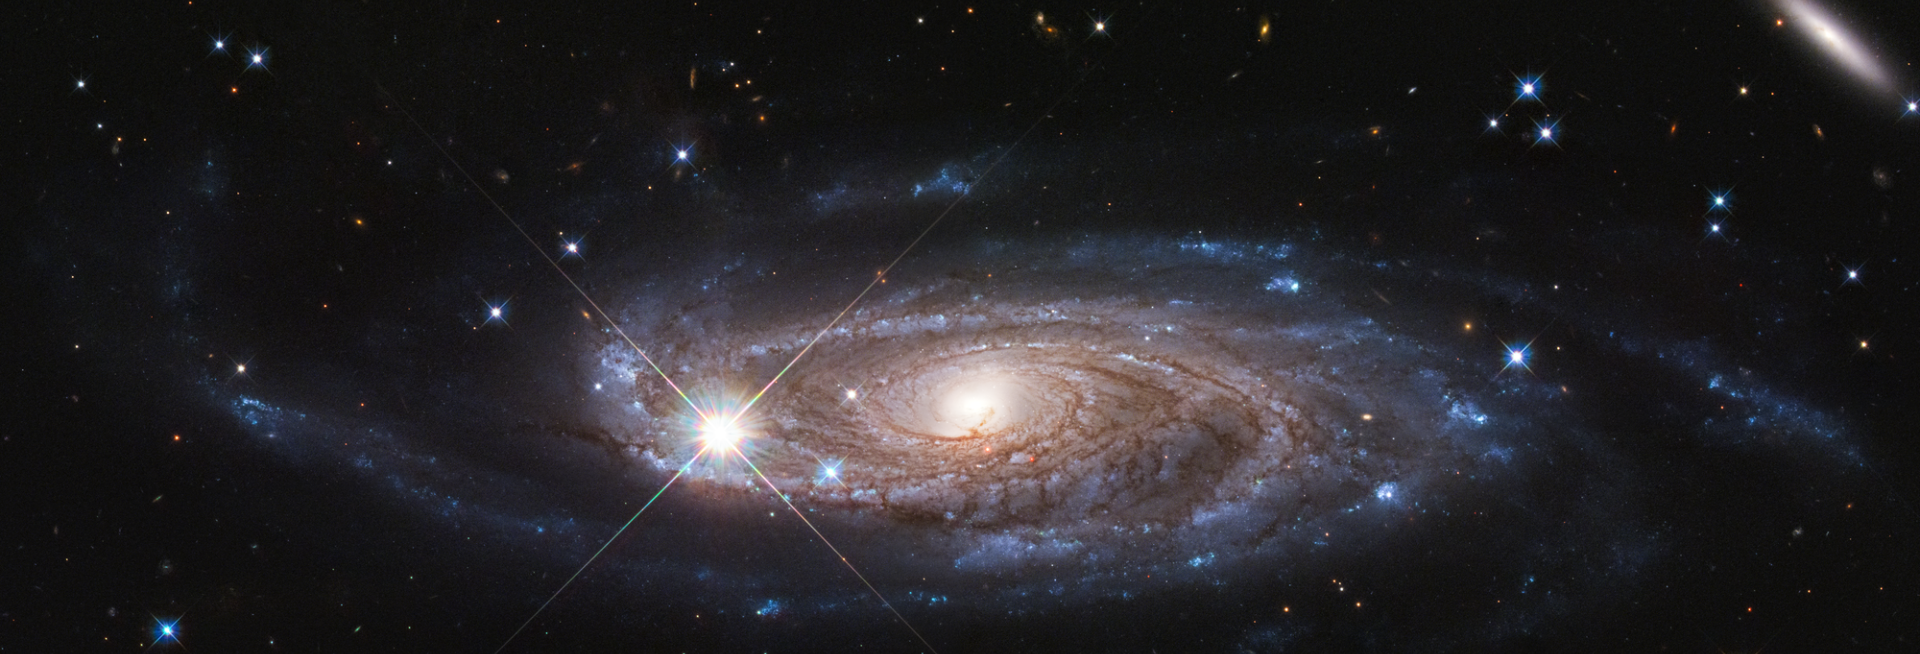 Image of galalxy